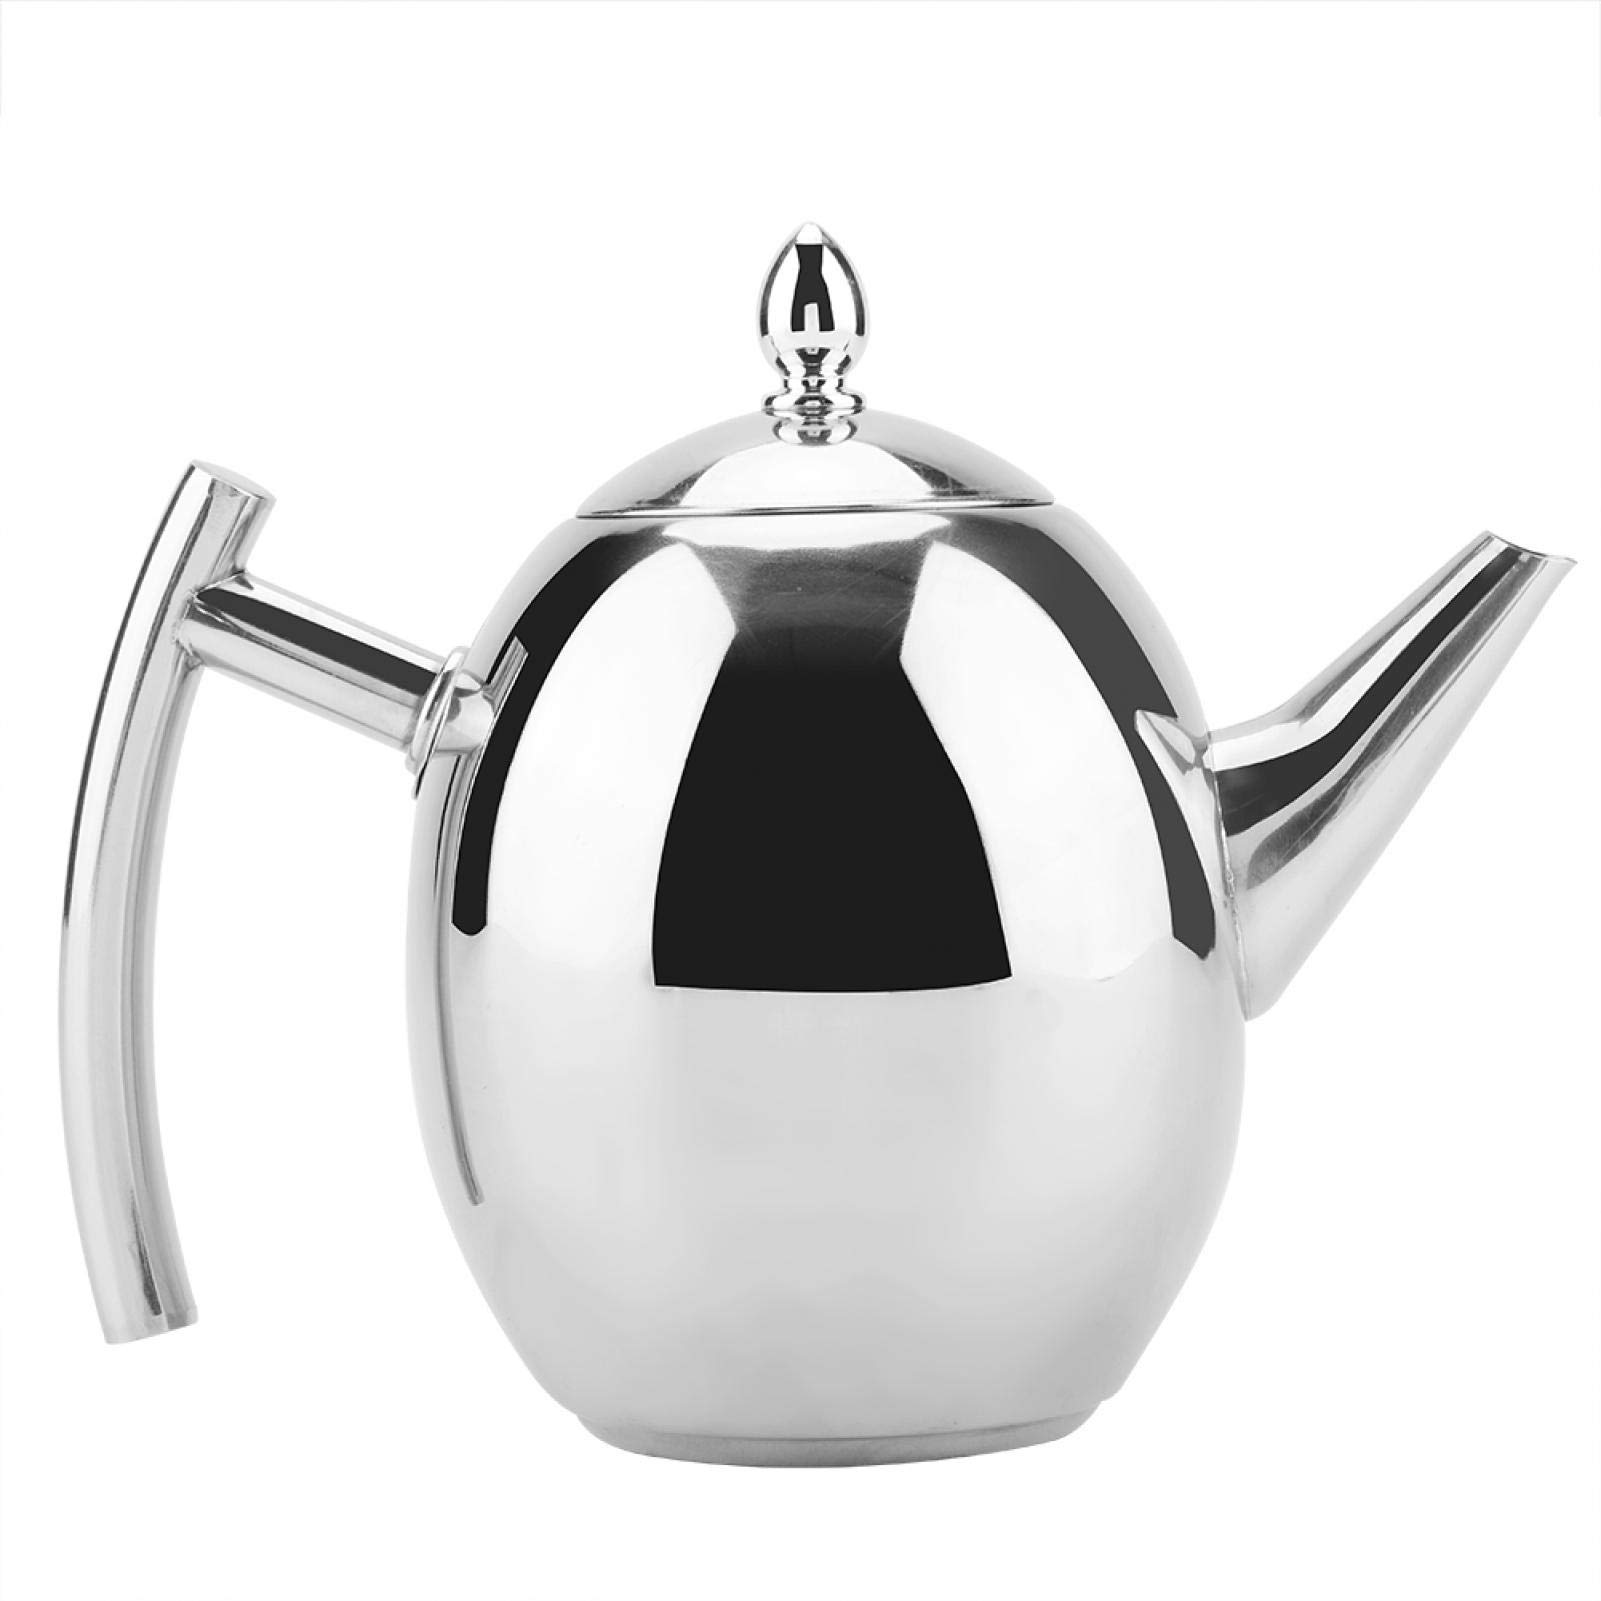 Edelstahl-Teekanne Professionelle Teekanne für Loseblatt- und Teebeutel für Haltewasser, Kräutertee, grüner Tee, Kaffee(1500ML)